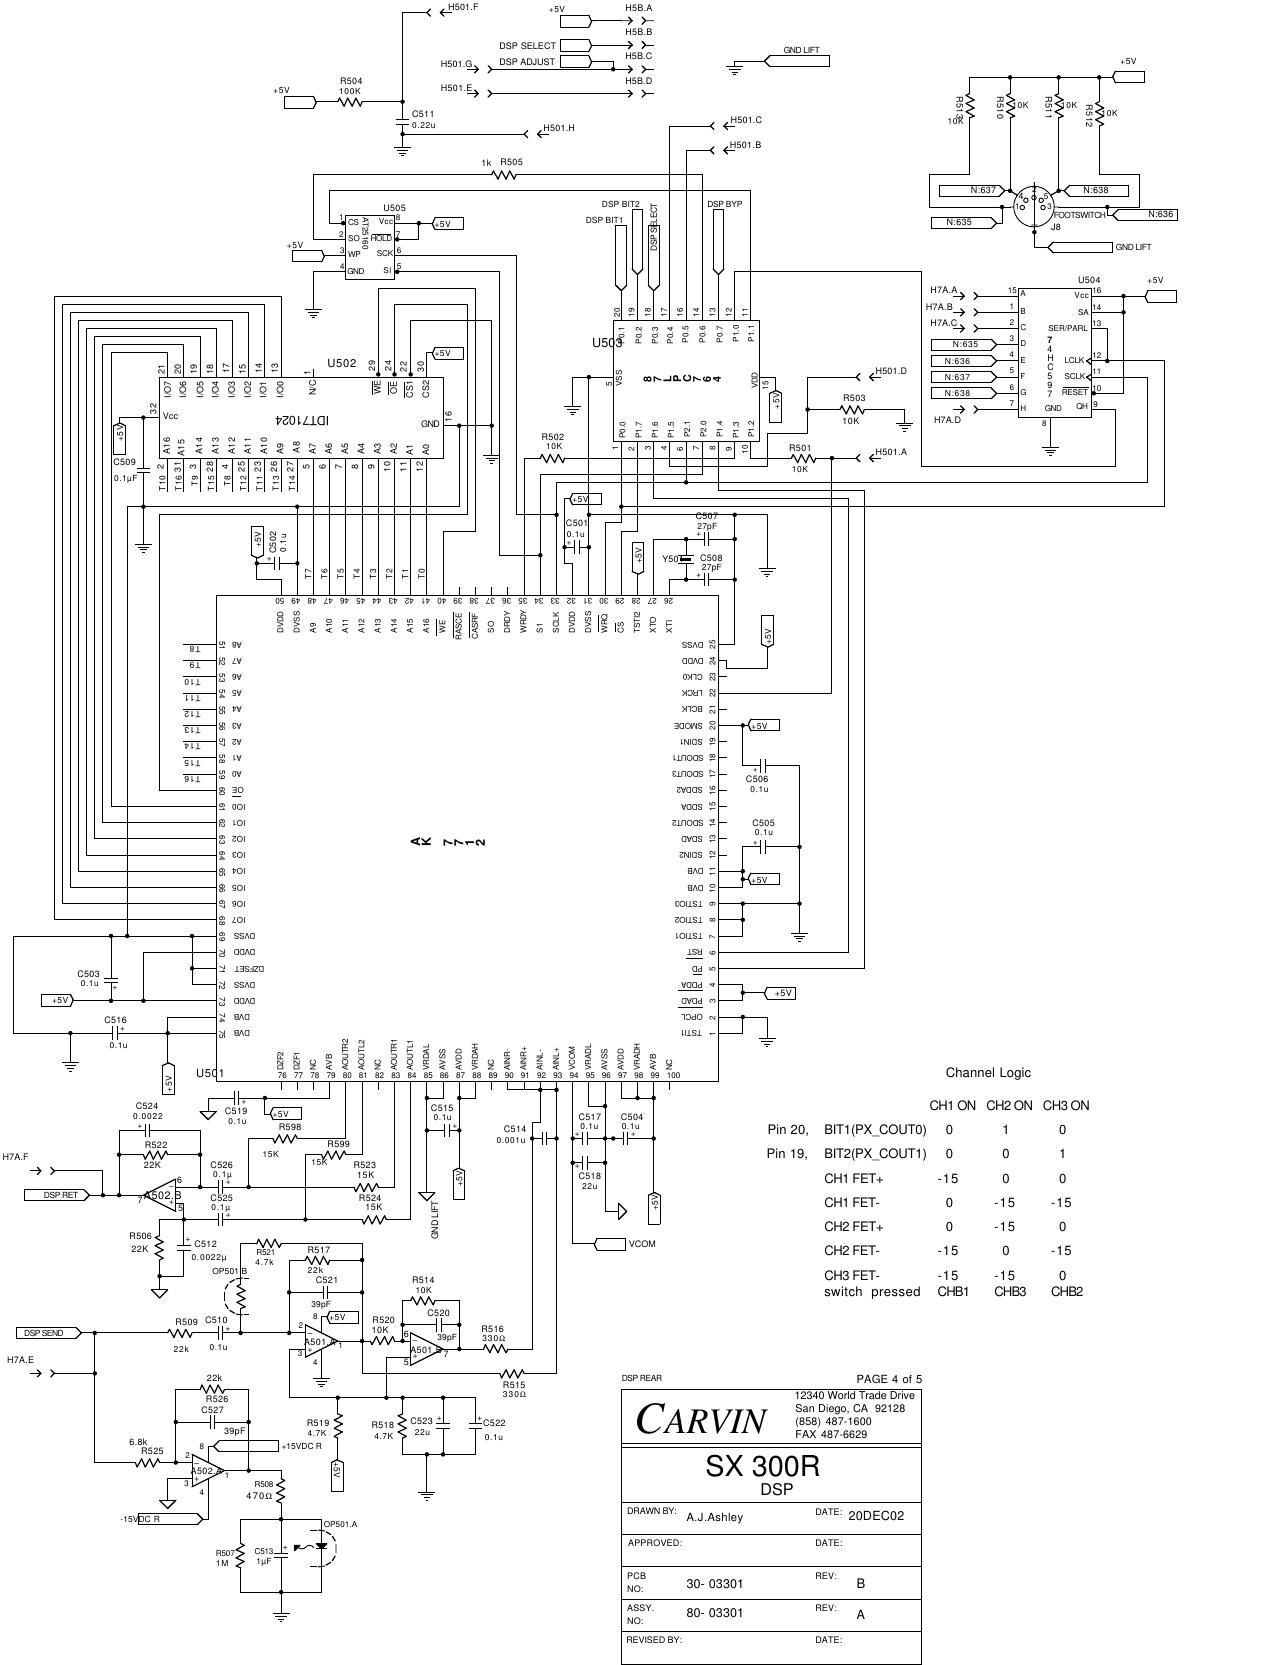 carvin sx 300r dsp schematic